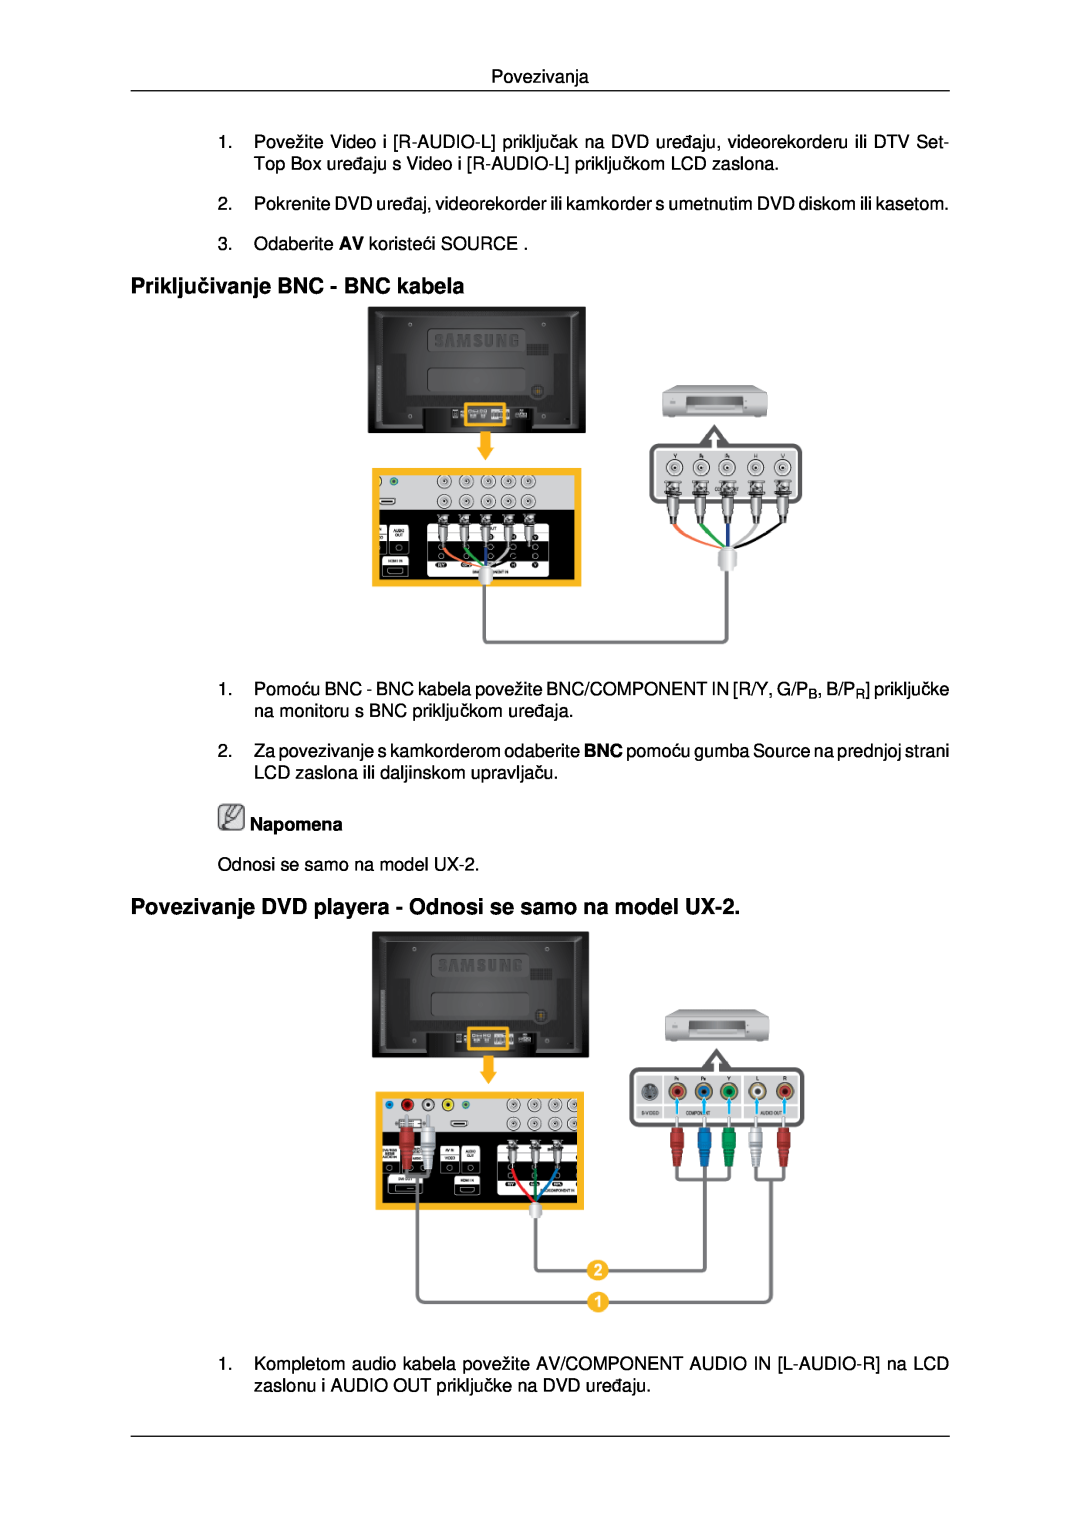 Samsung LH46MSTLBB/EN Priključivanje BNC - BNC kabela, Povezivanje DVD playera - Odnosi se samo na model UX-2, Napomena 